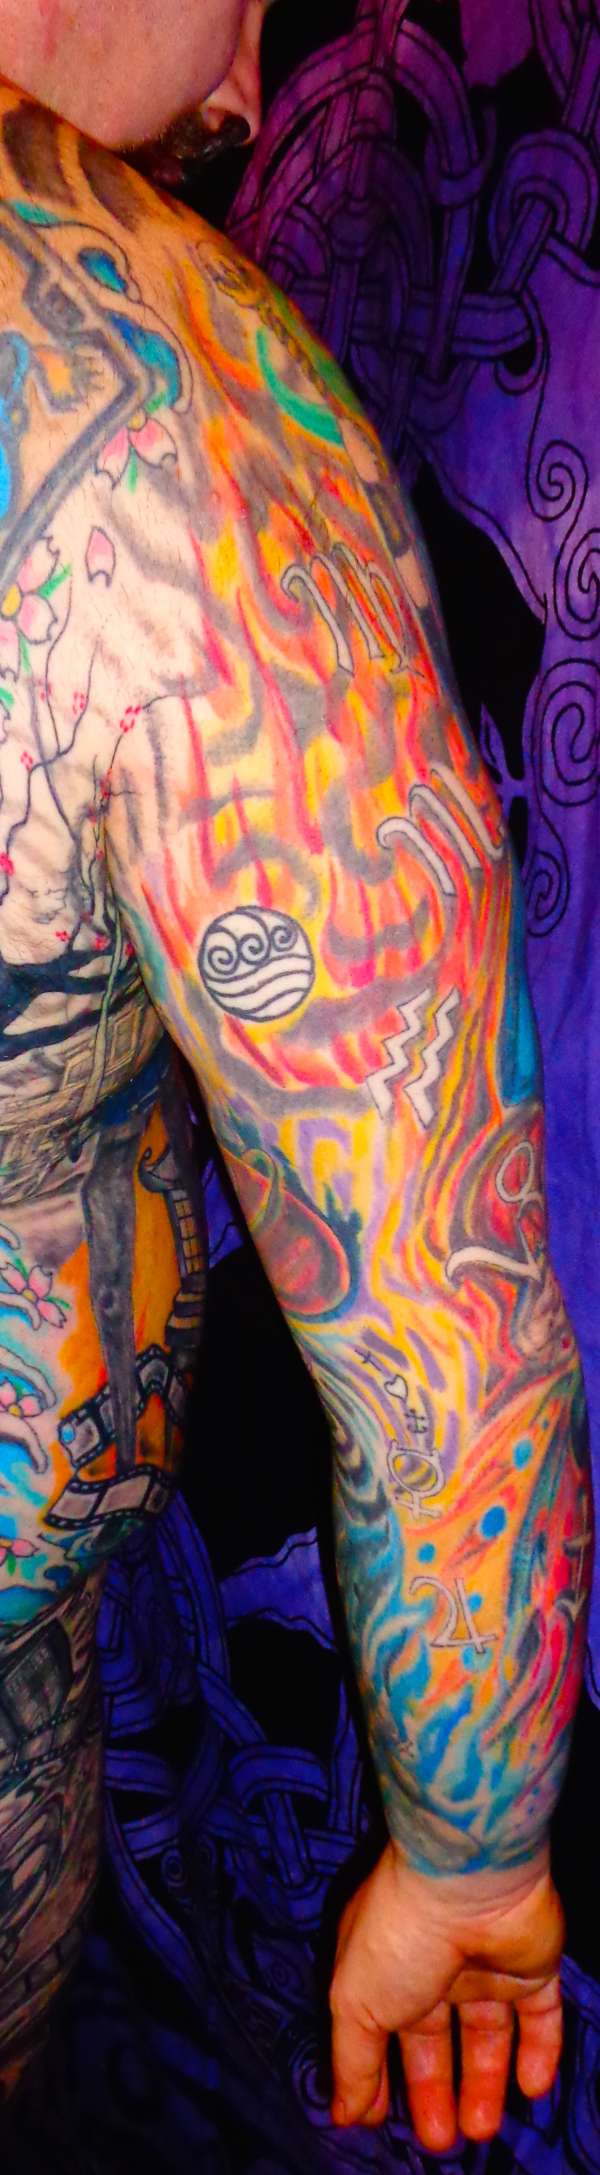 Right arm sleeve tattoo